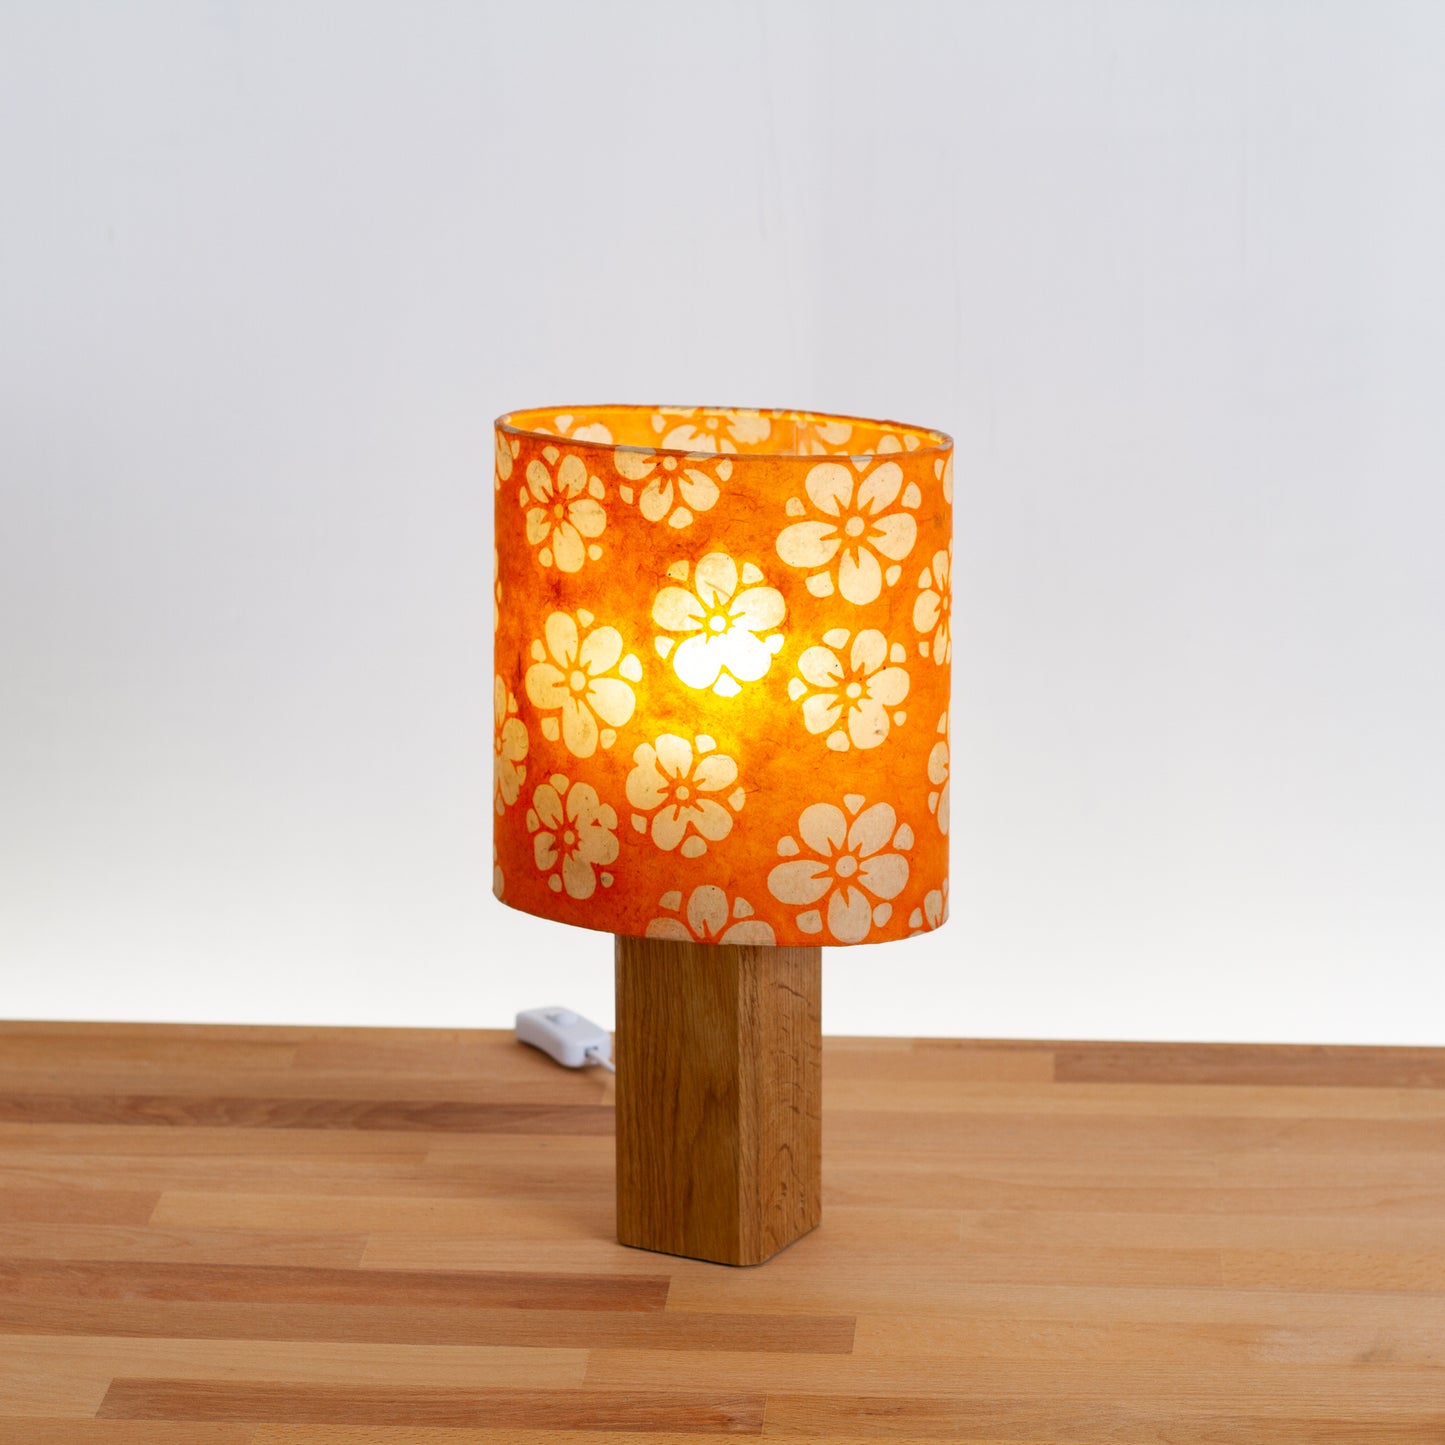 Square Oak Table Lamp with 20cm Oval Lamp Shade P94 - Batik Star Flower on Orange